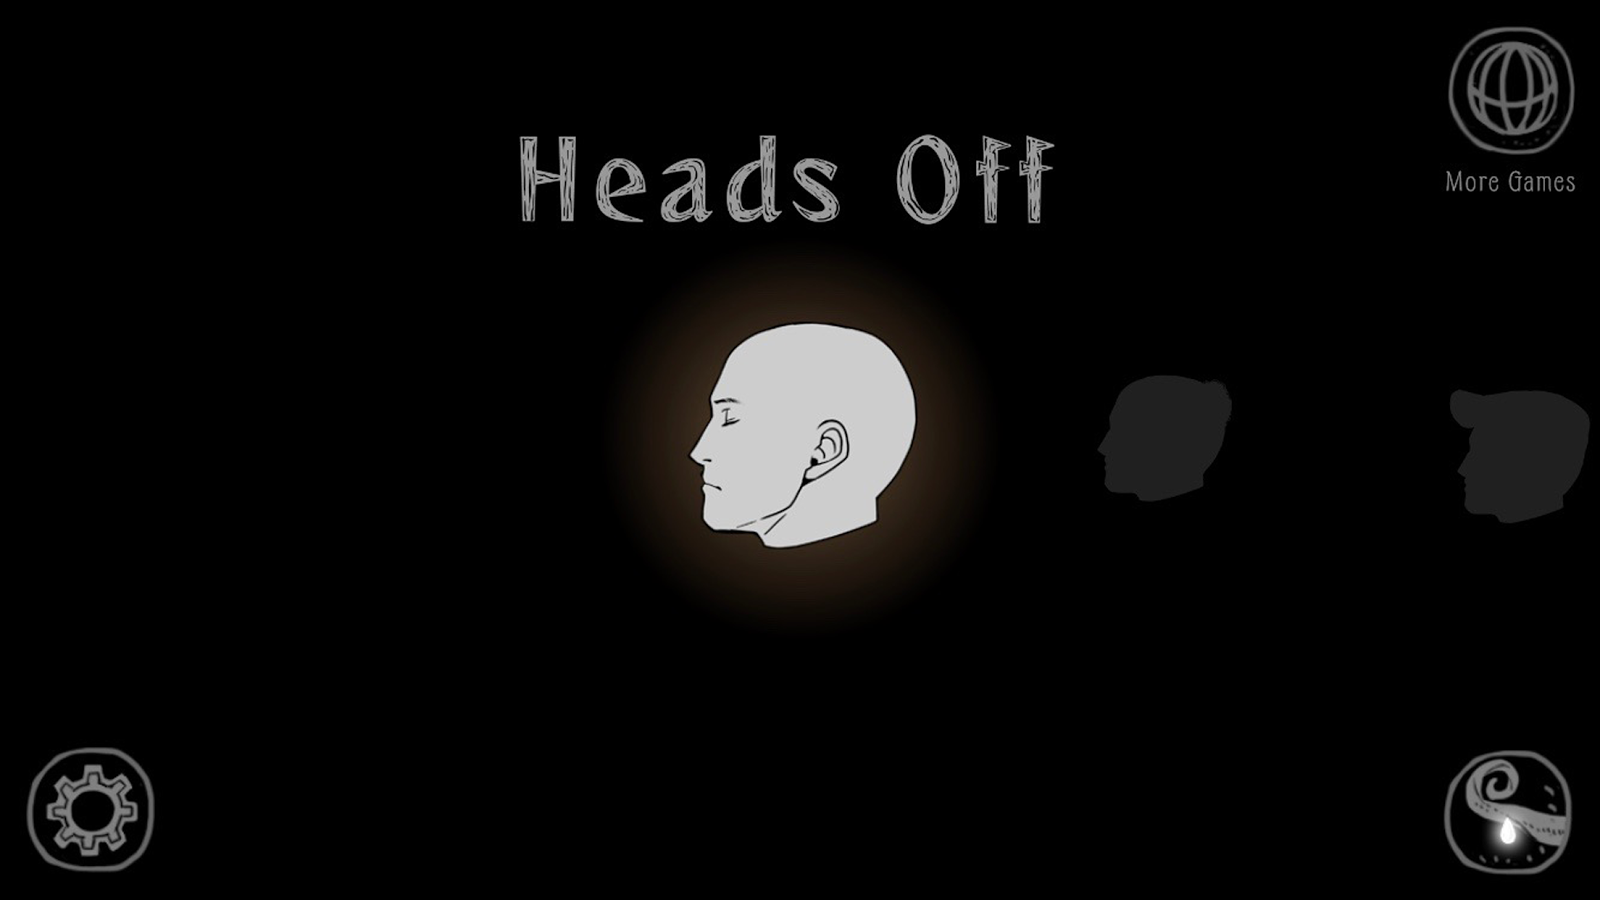 HeadsOff